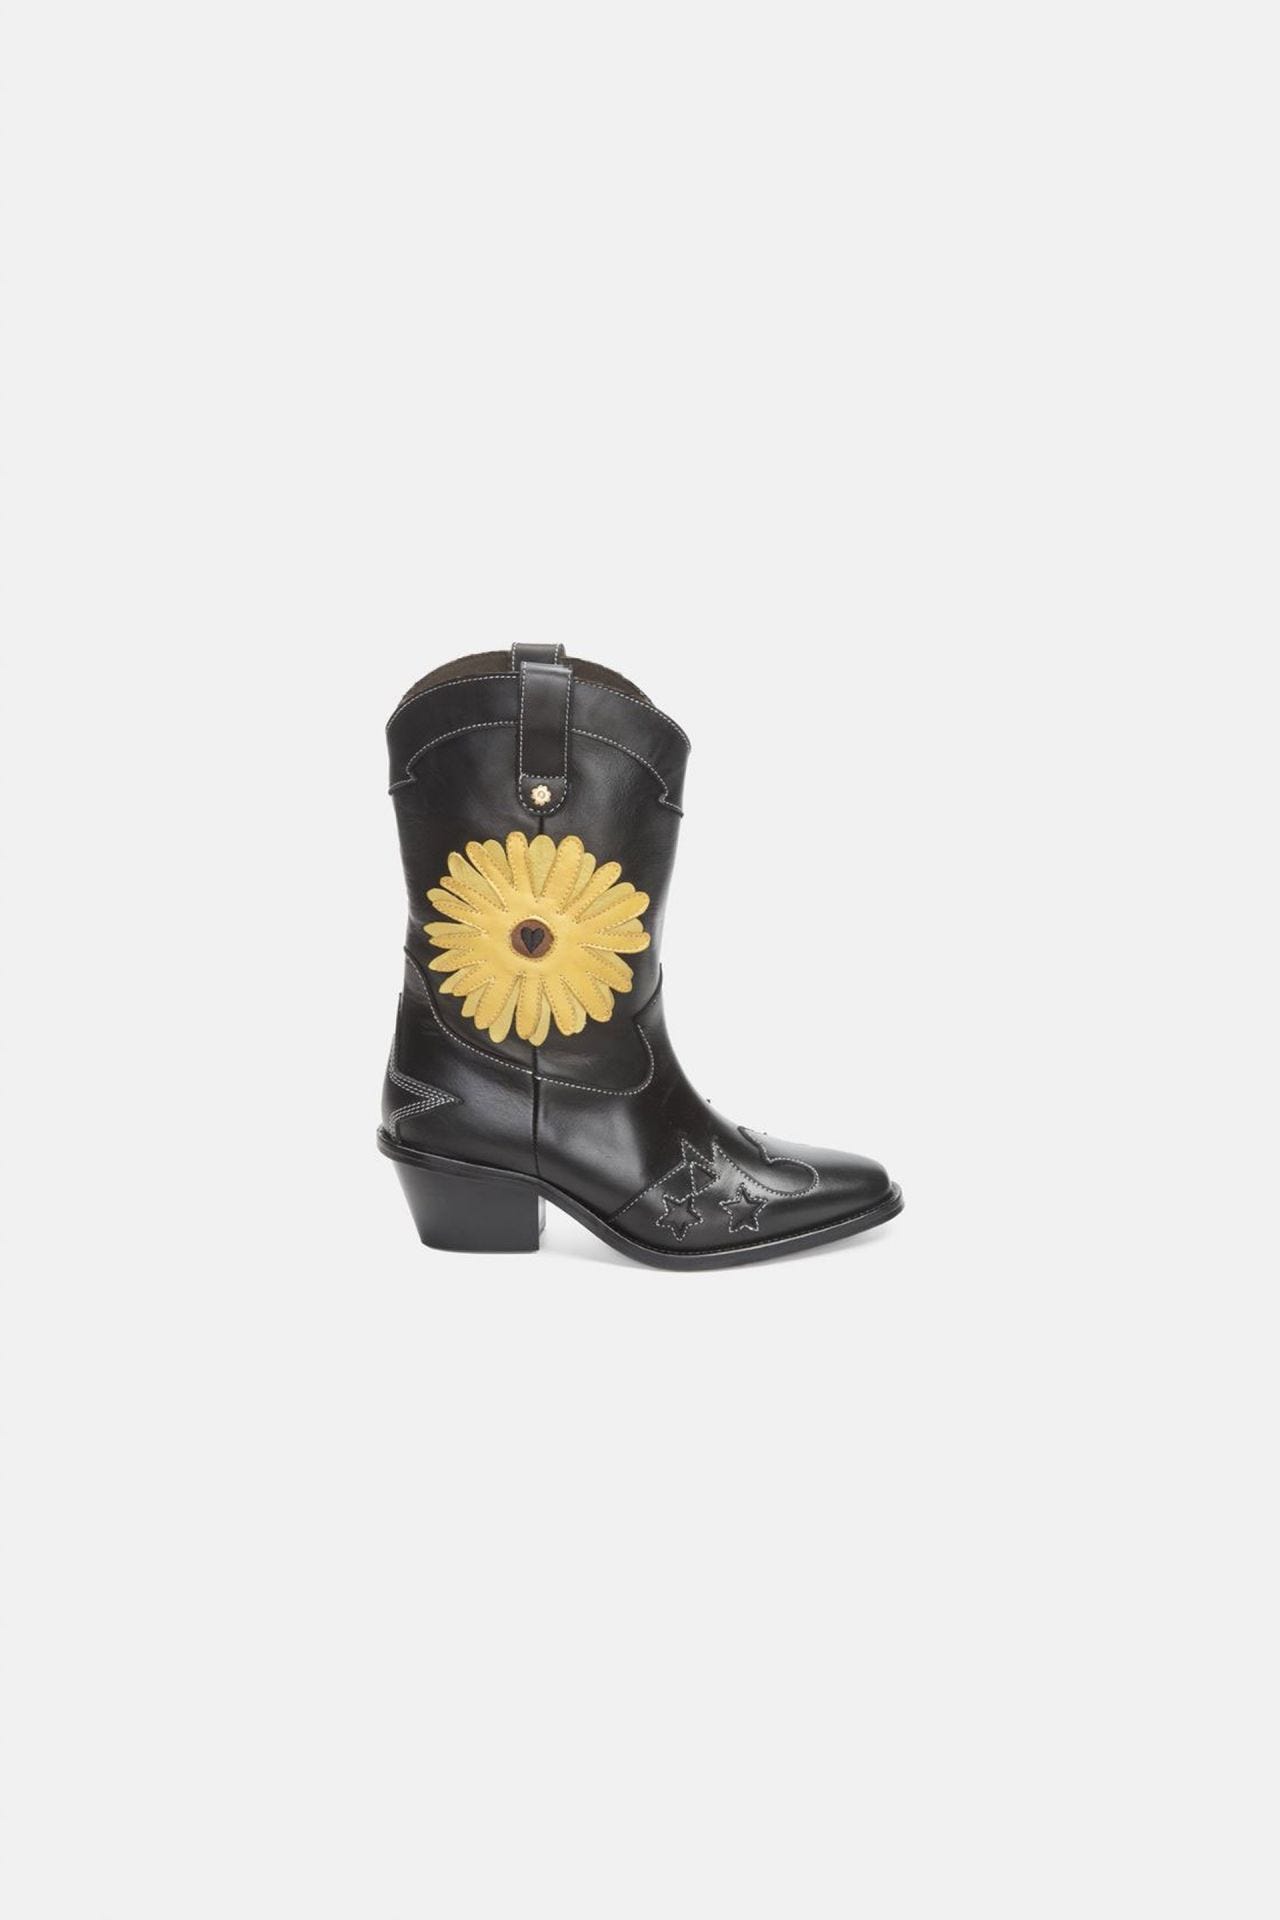 Zwarte dames laarzen Fabienne Chapot - Jolly Sunset Flower Boots black/sunny yelw